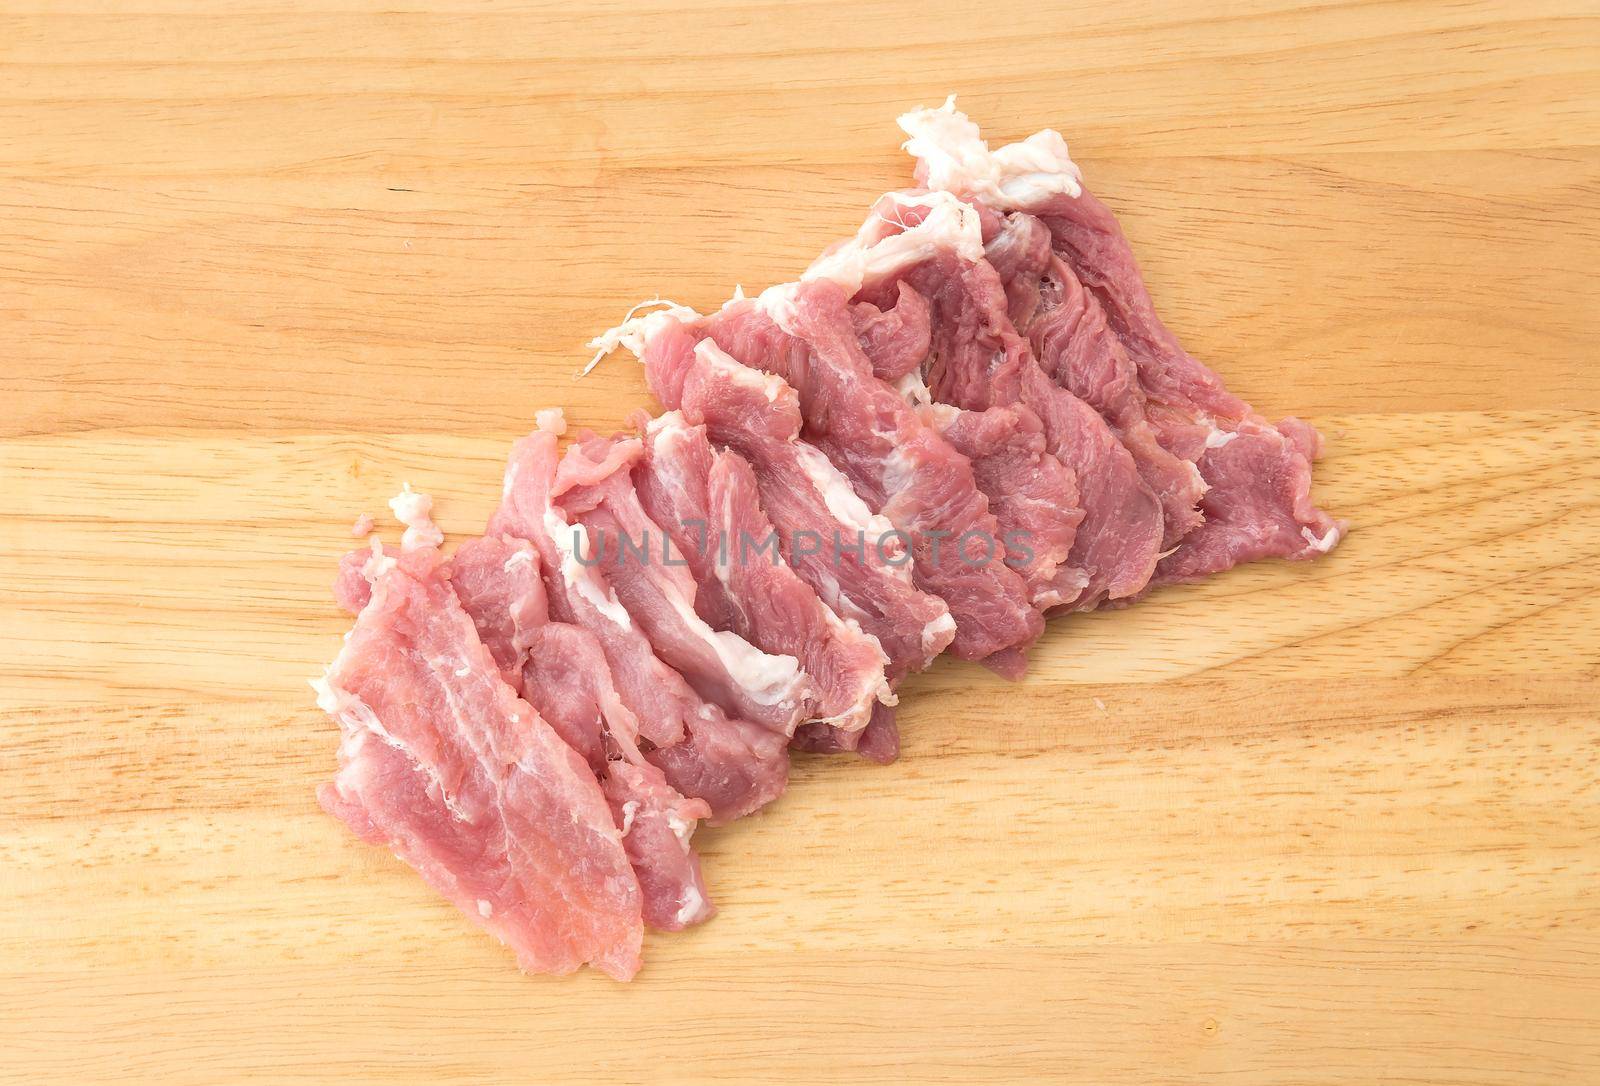 slice pork on wood board